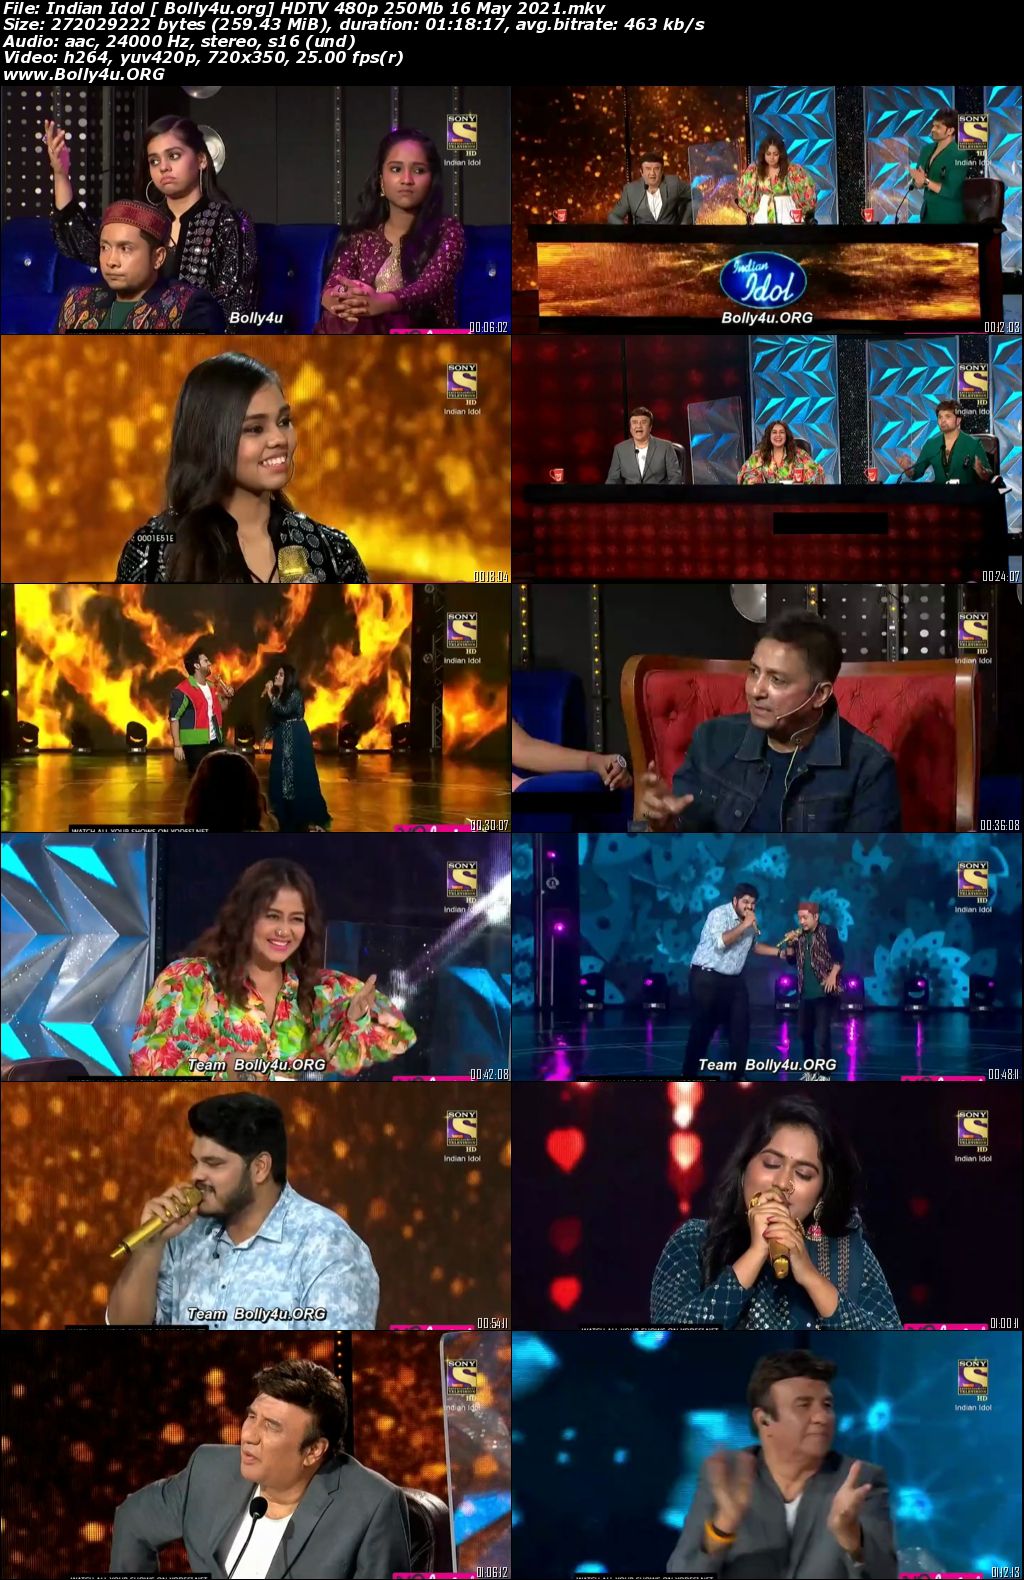 Indian Idol HDTV 480p 250Mb 16 May 2021 Download